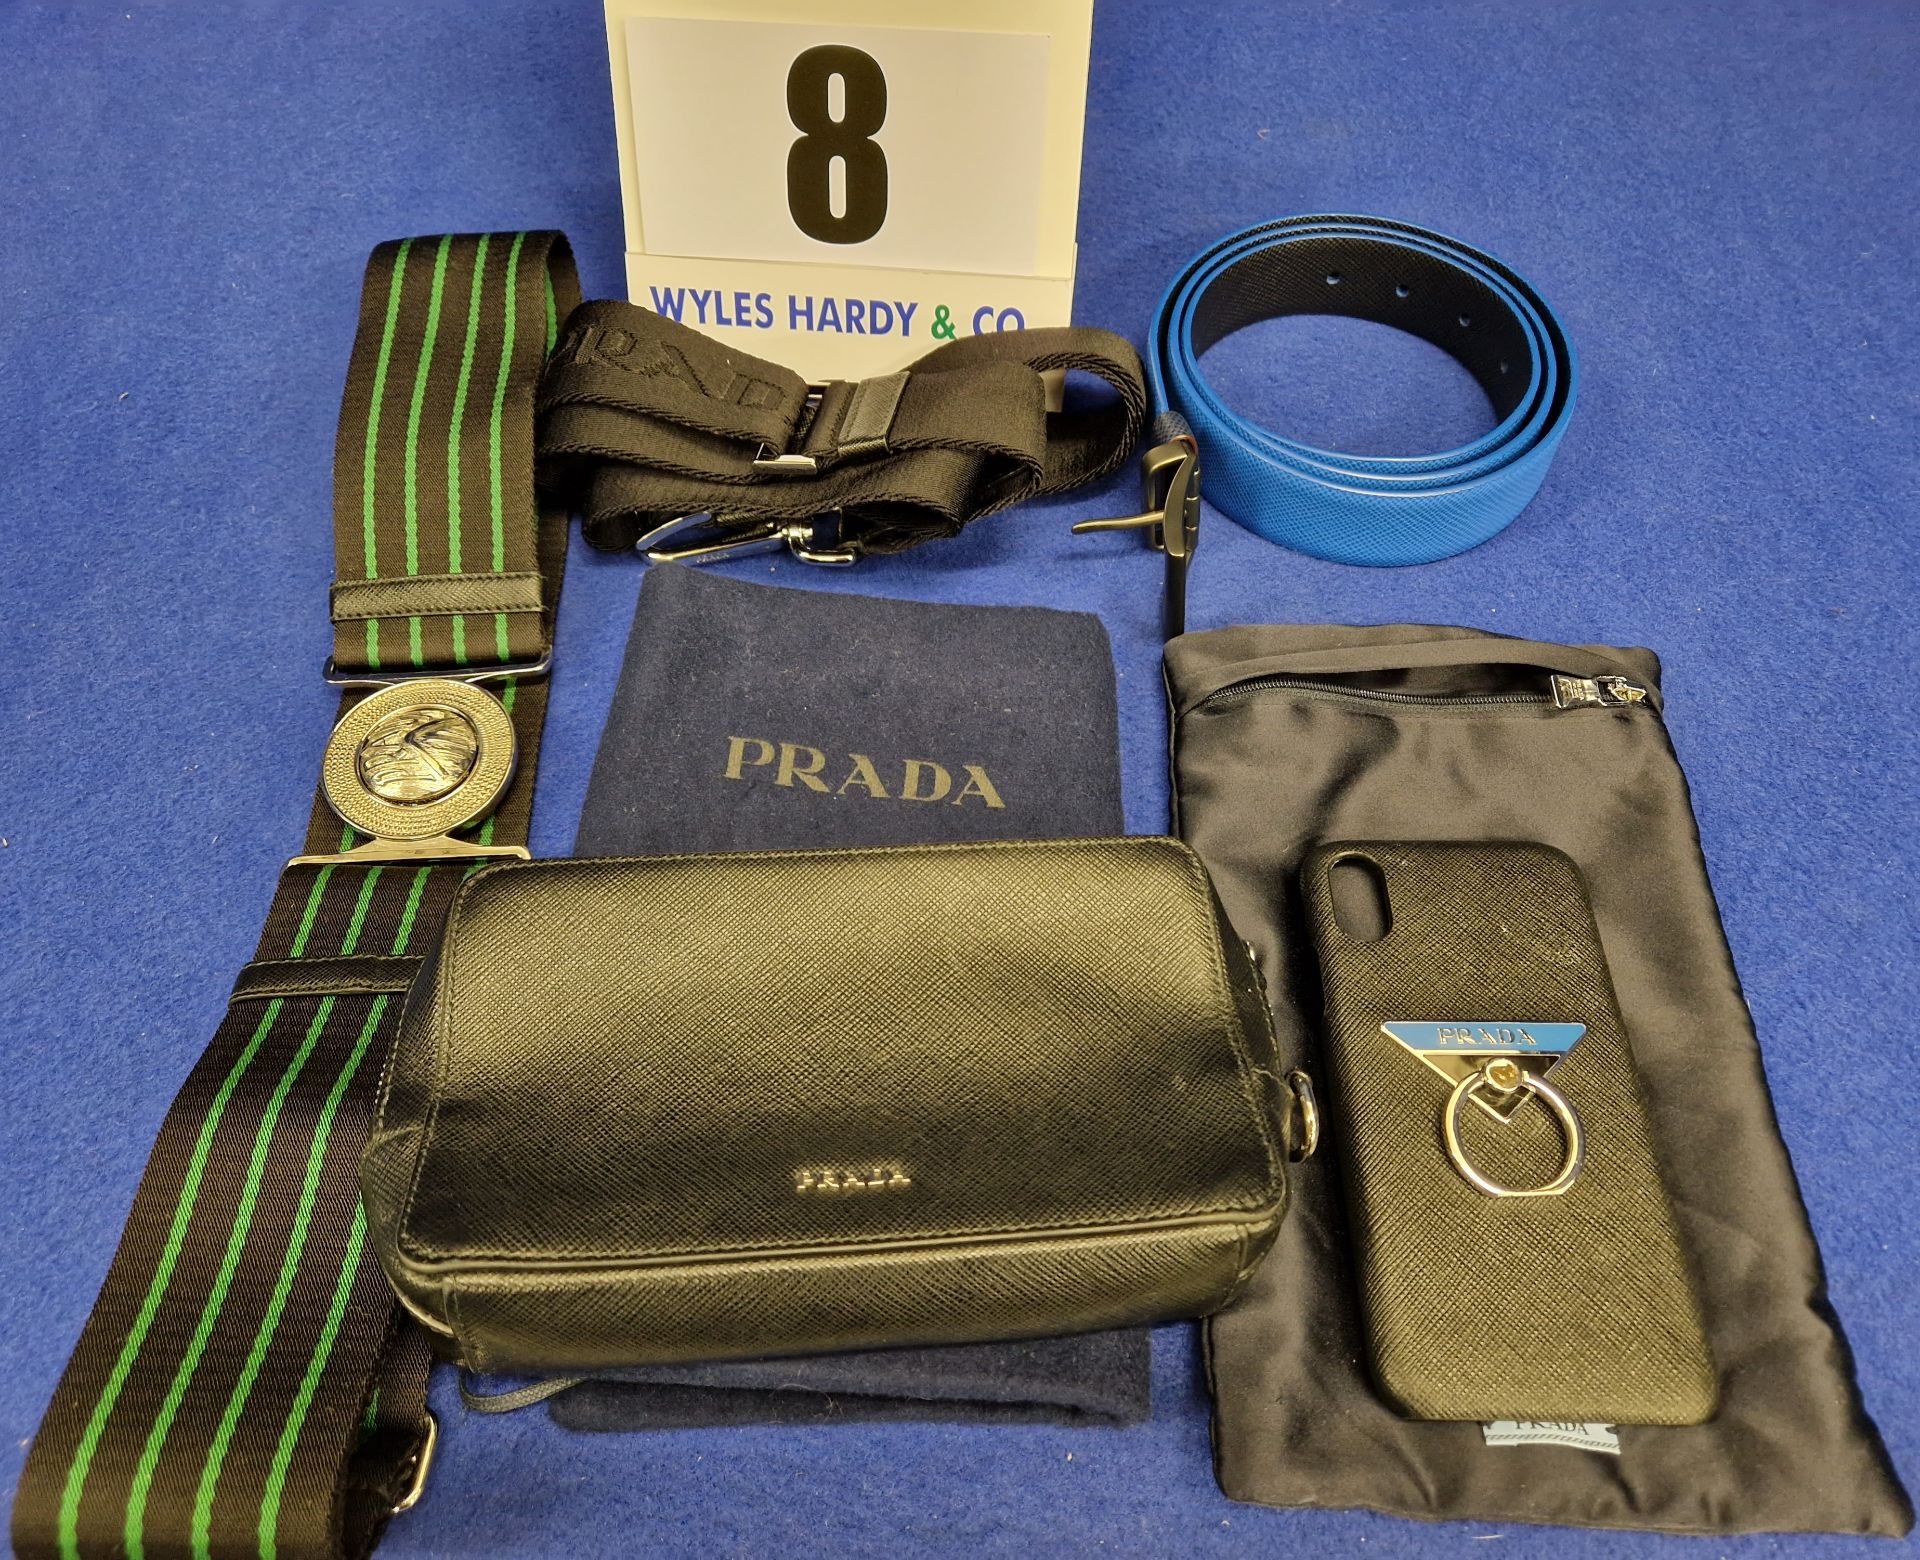 A Collection of PRADA Accessories comprising:- - A PRADA Black Saffiano Leather Small Pouch/Clutch